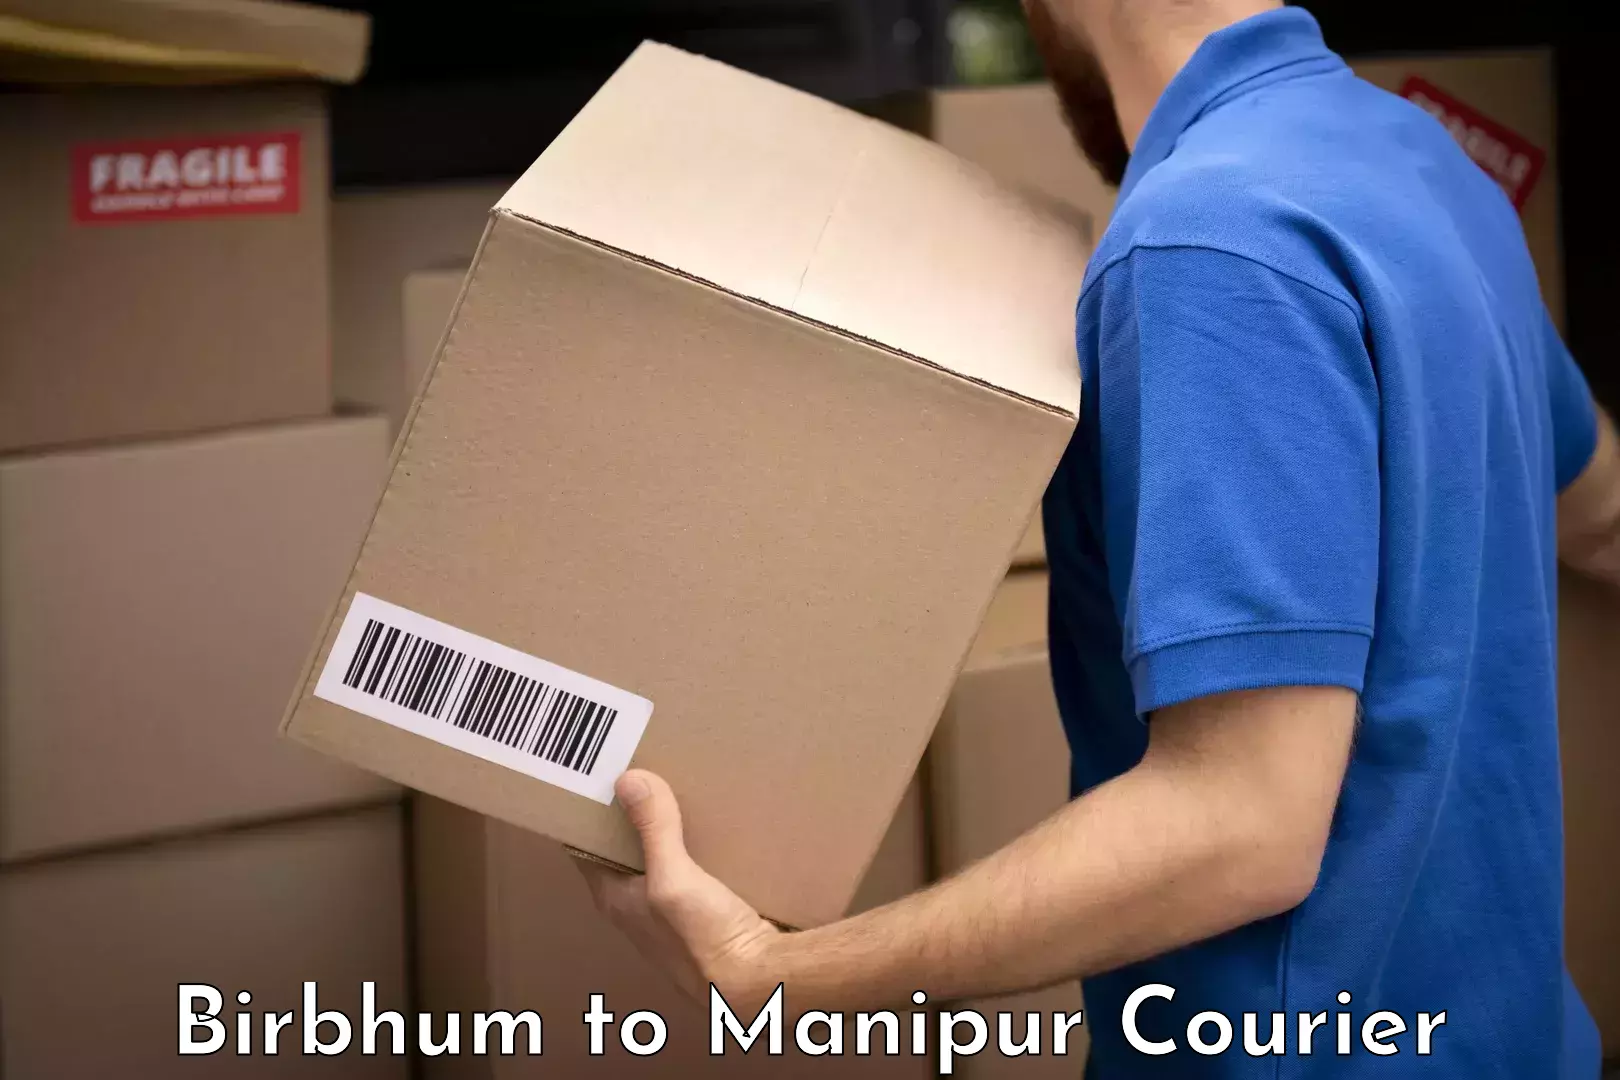 Luggage shipment specialists Birbhum to Manipur